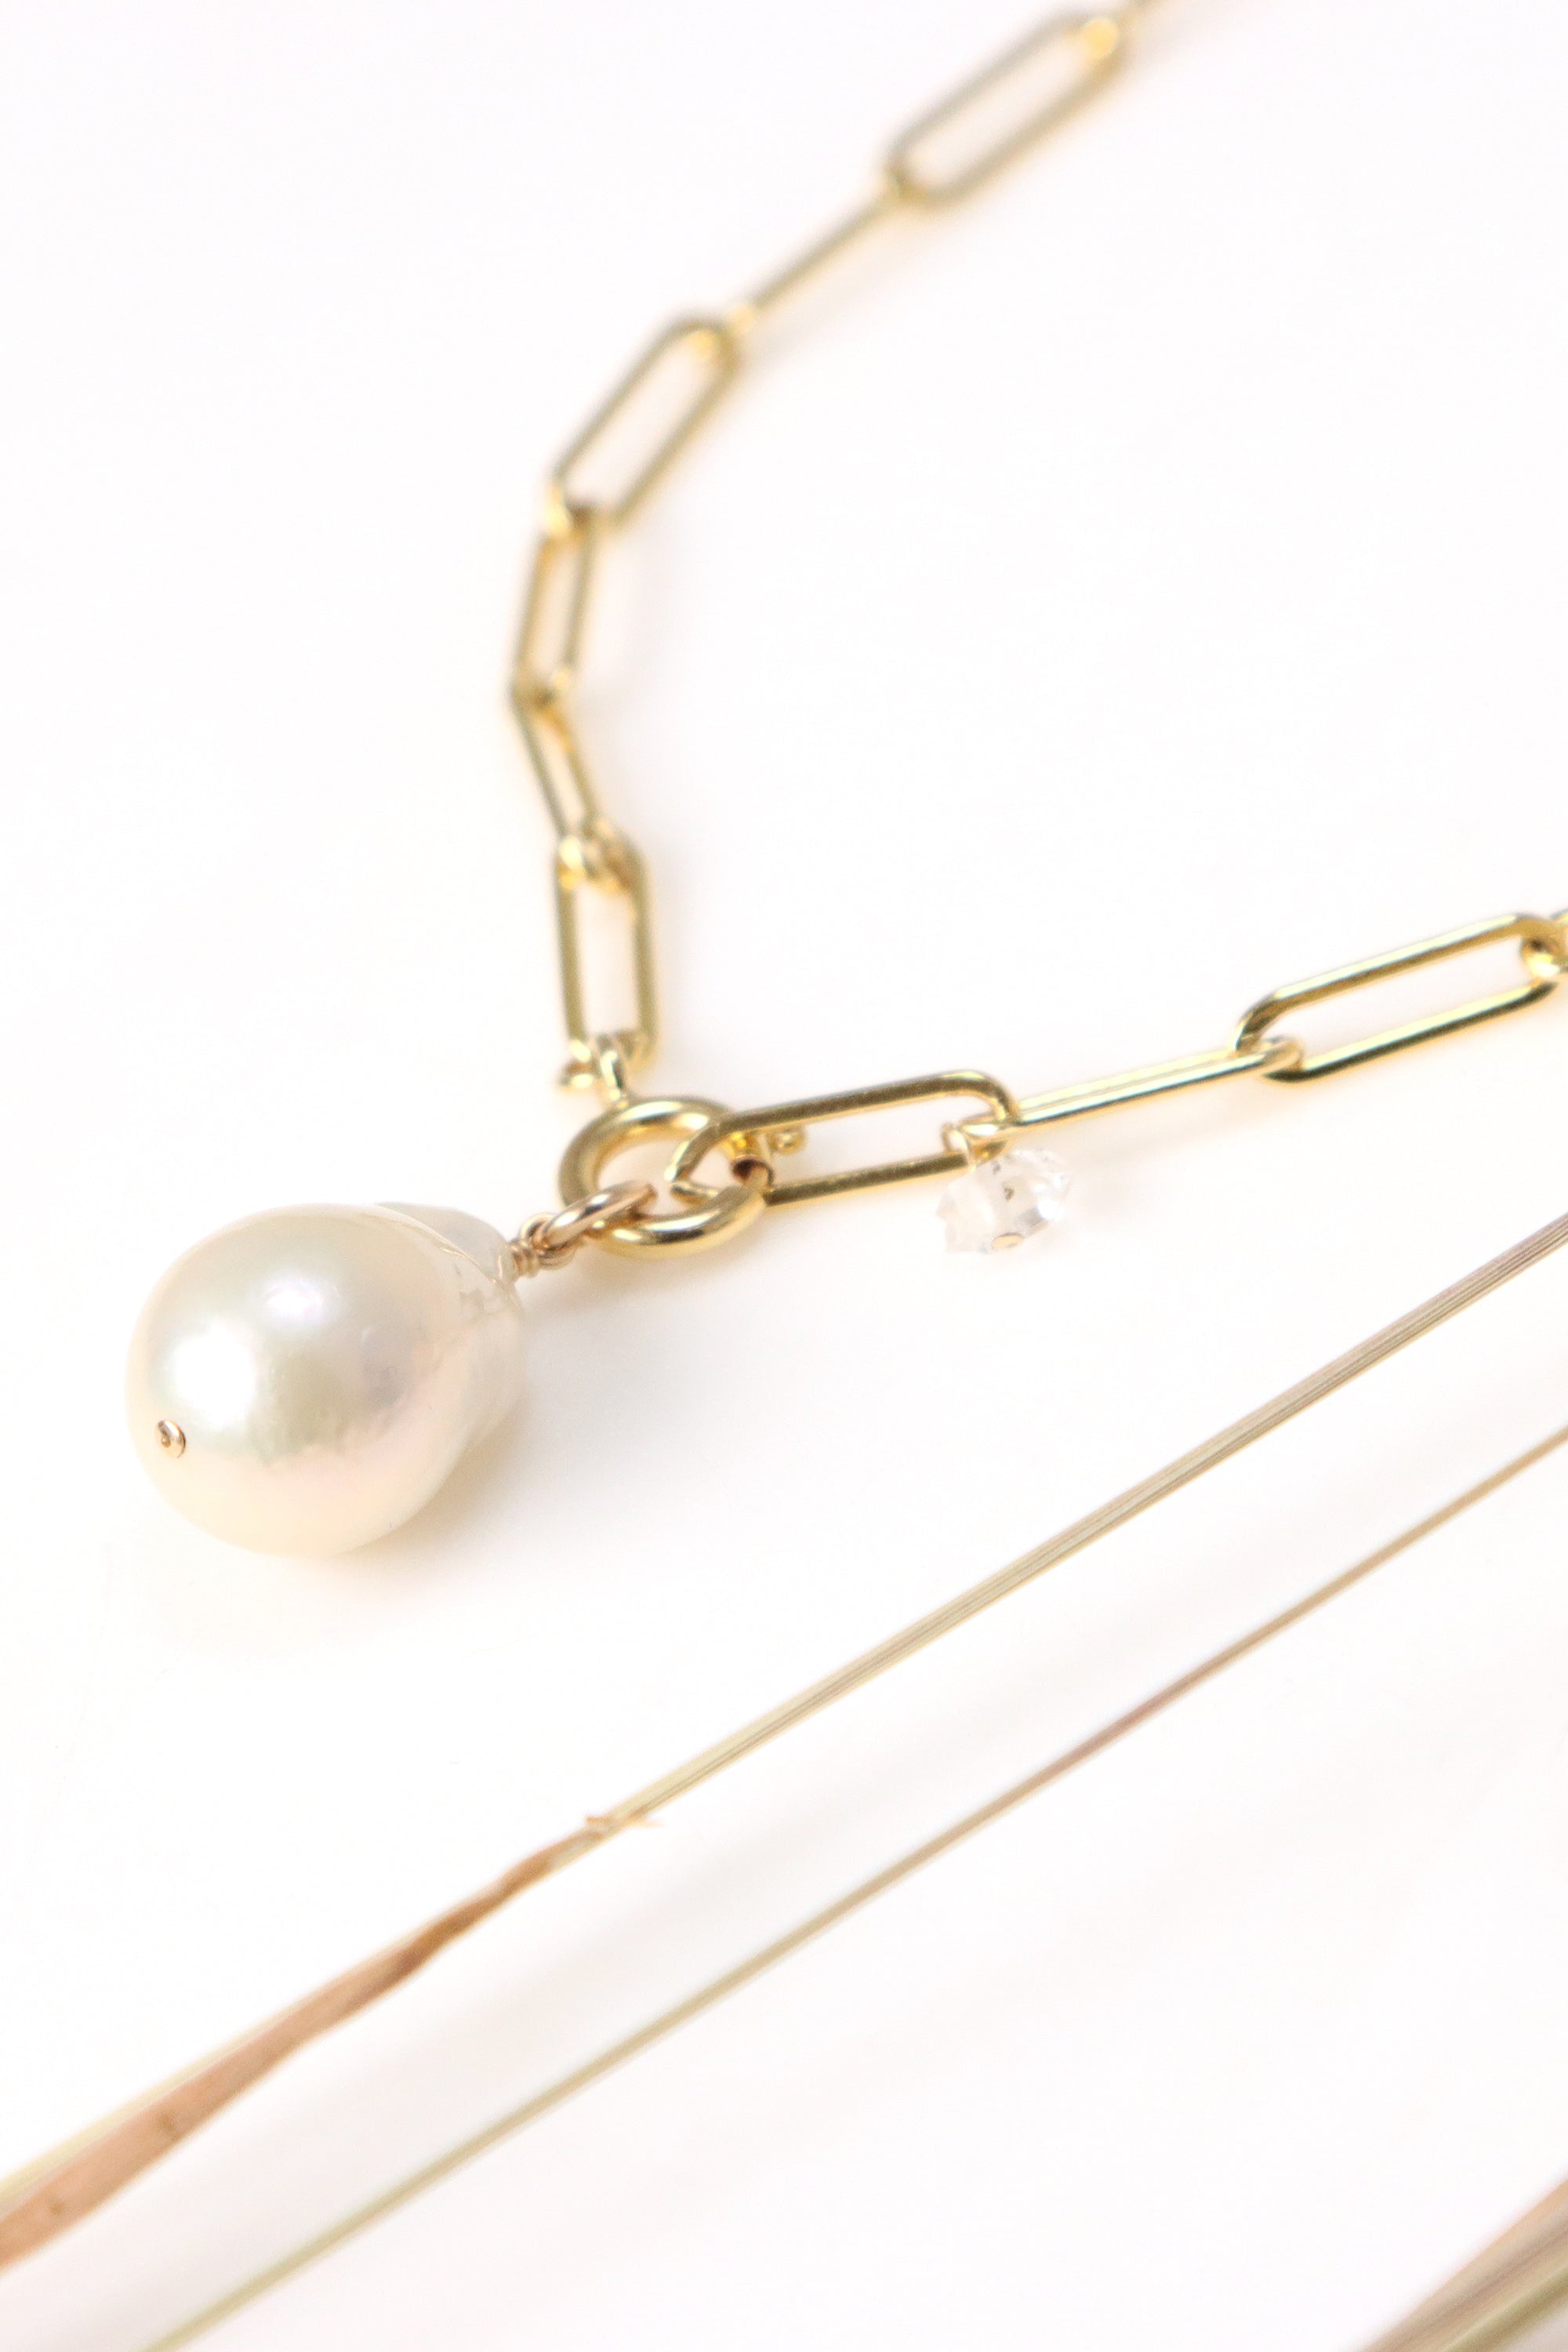 Gold Pearl dew drops necklace, मोतियों का हार - Adorna, Chennai